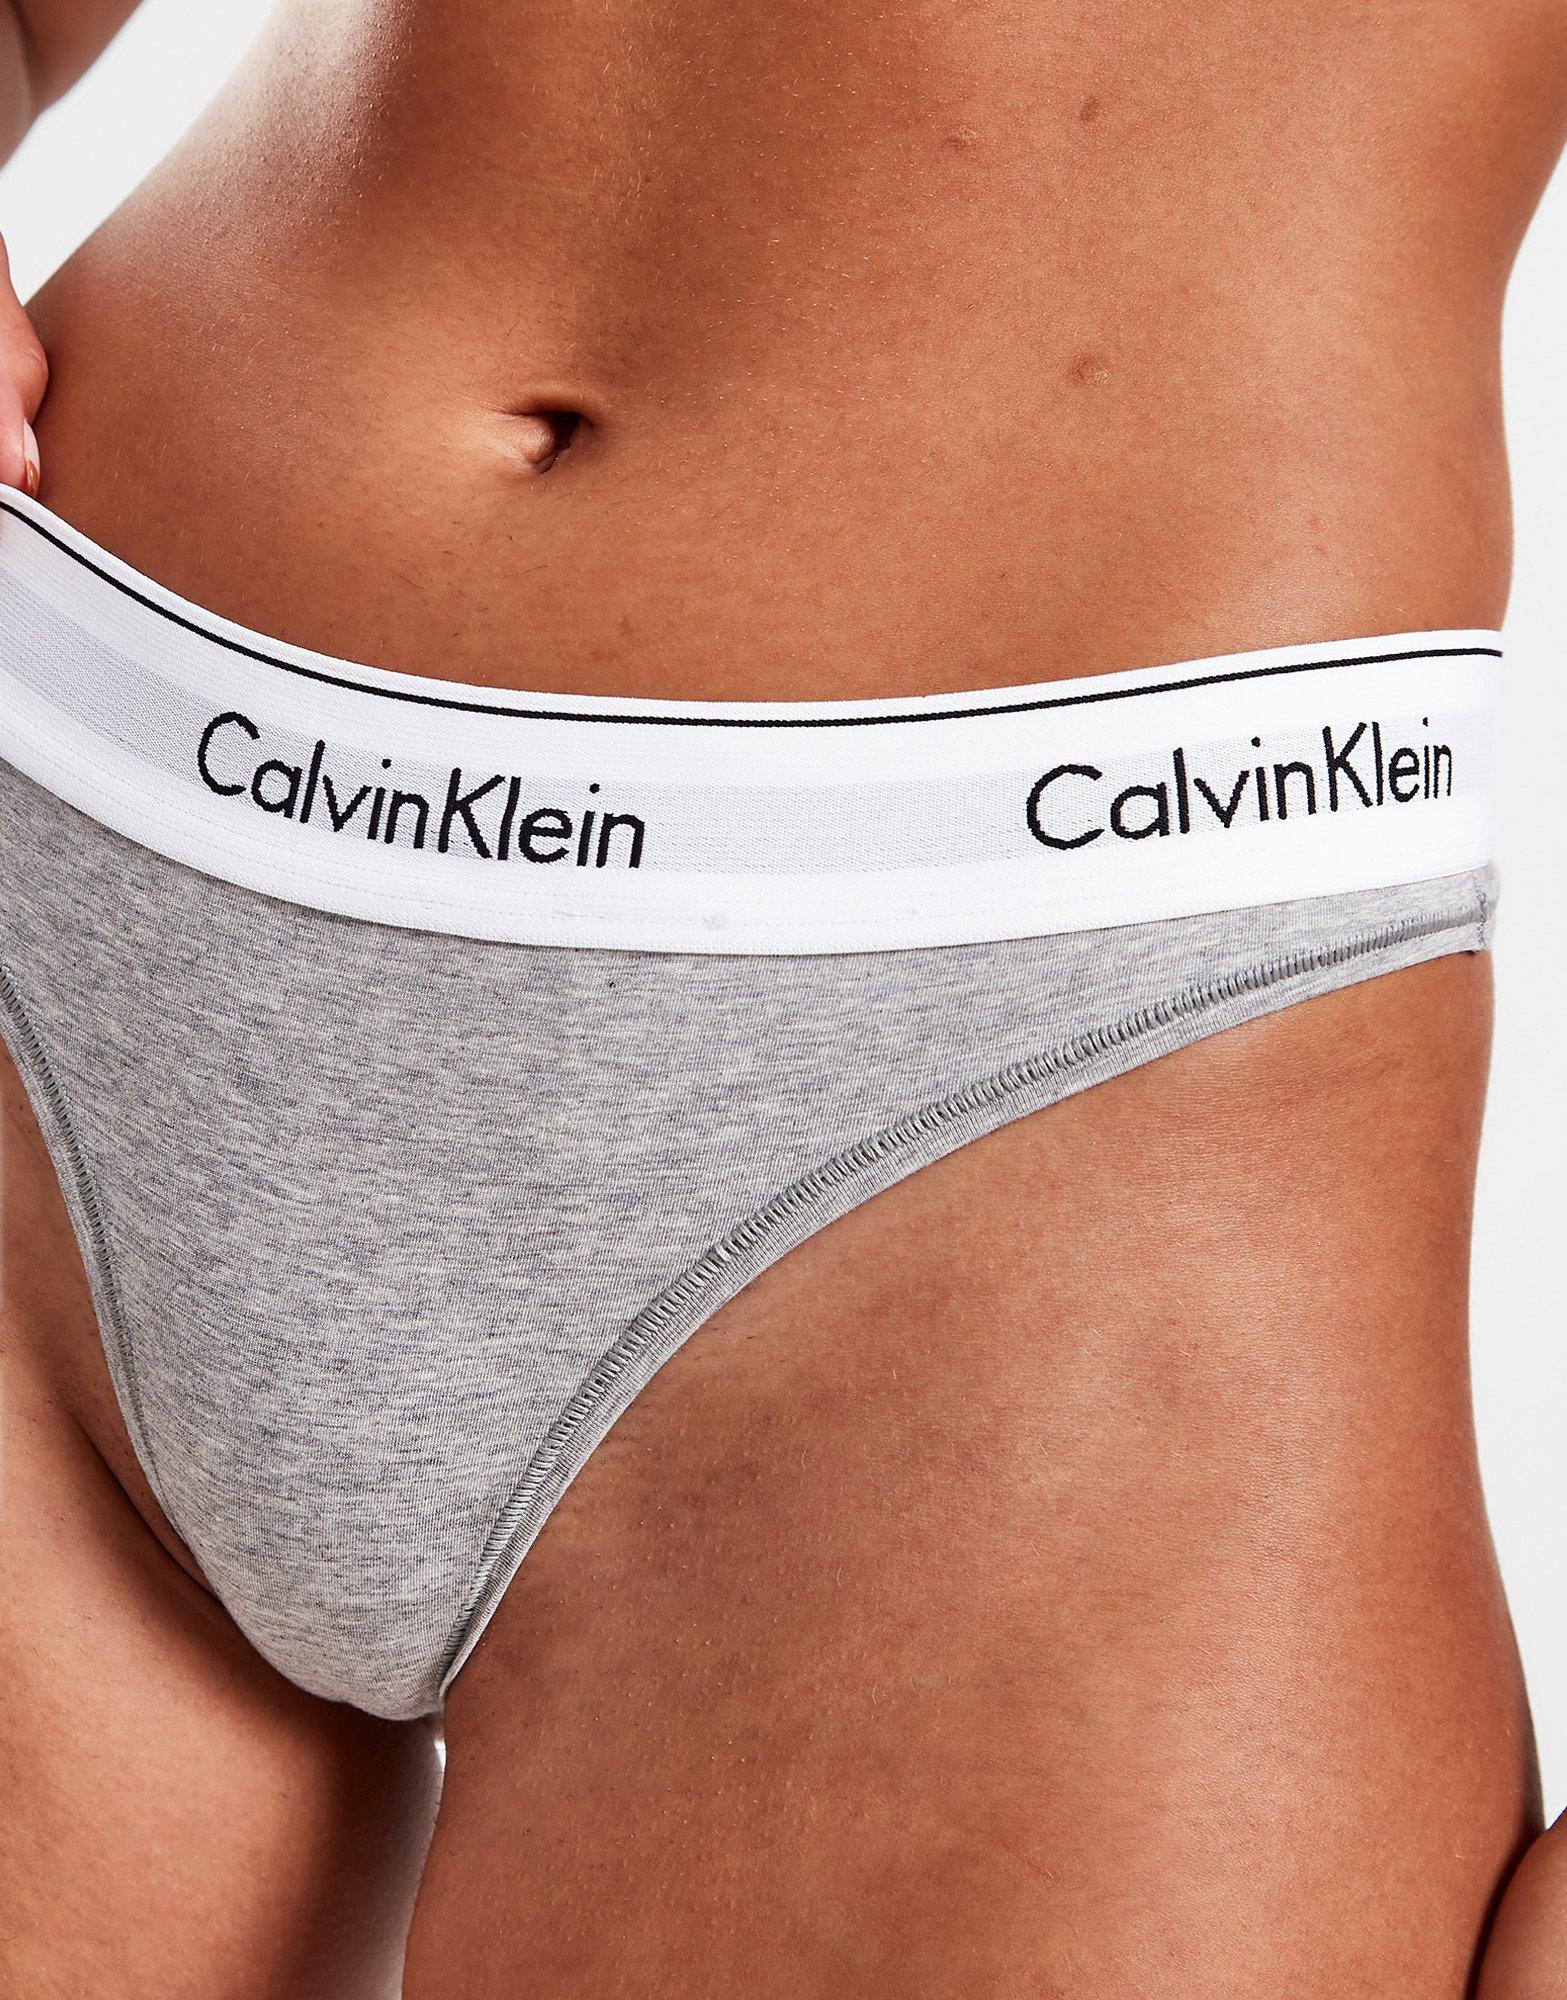 Calvin Klein Jeans MODERN THONG - Unterwäsche Tangas Damen CHF 15.40